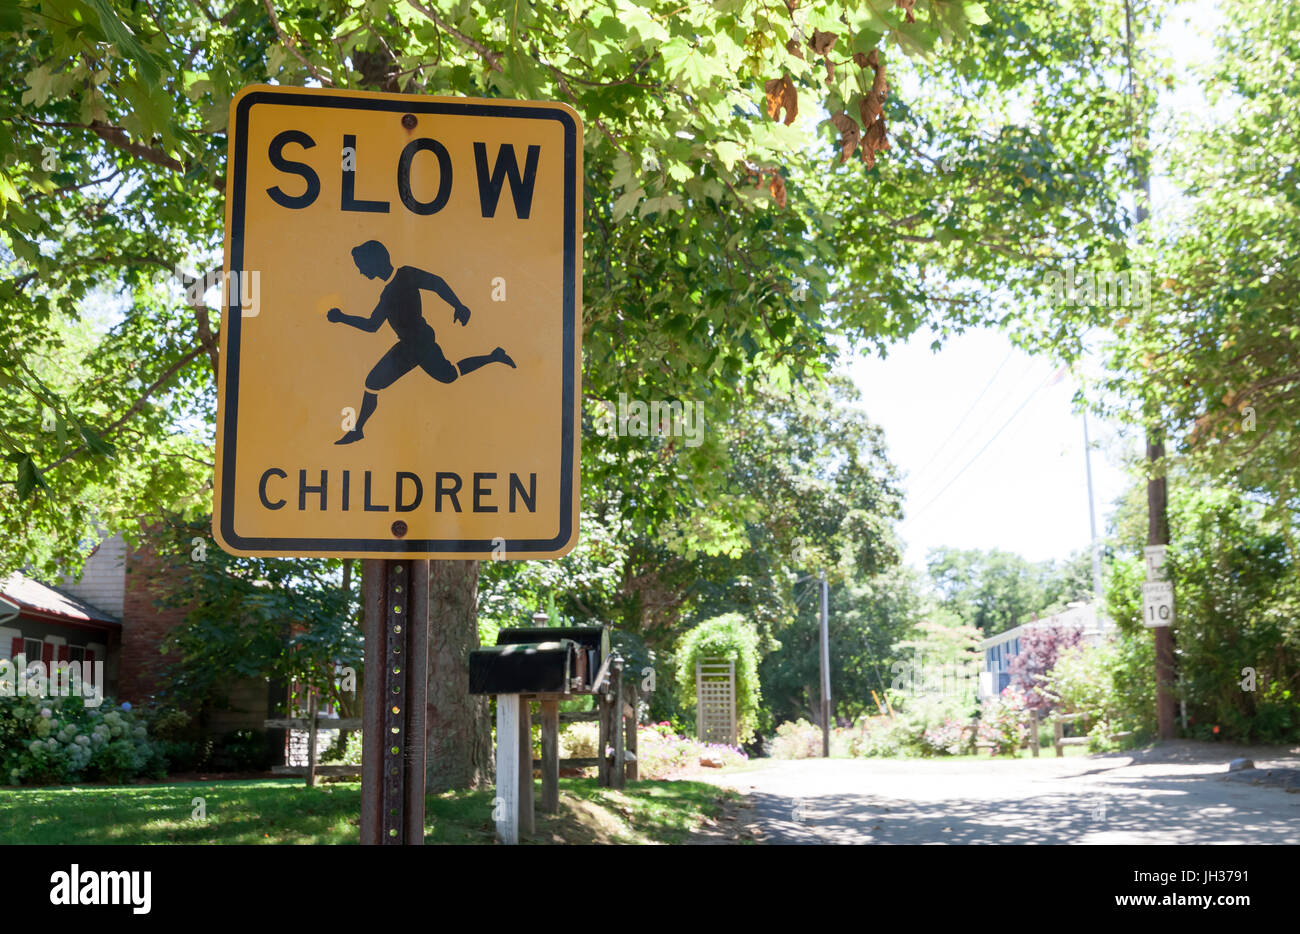 Langsame Kinder Warnschild drängen Autofahrer zu verlangsamen. Stockfoto